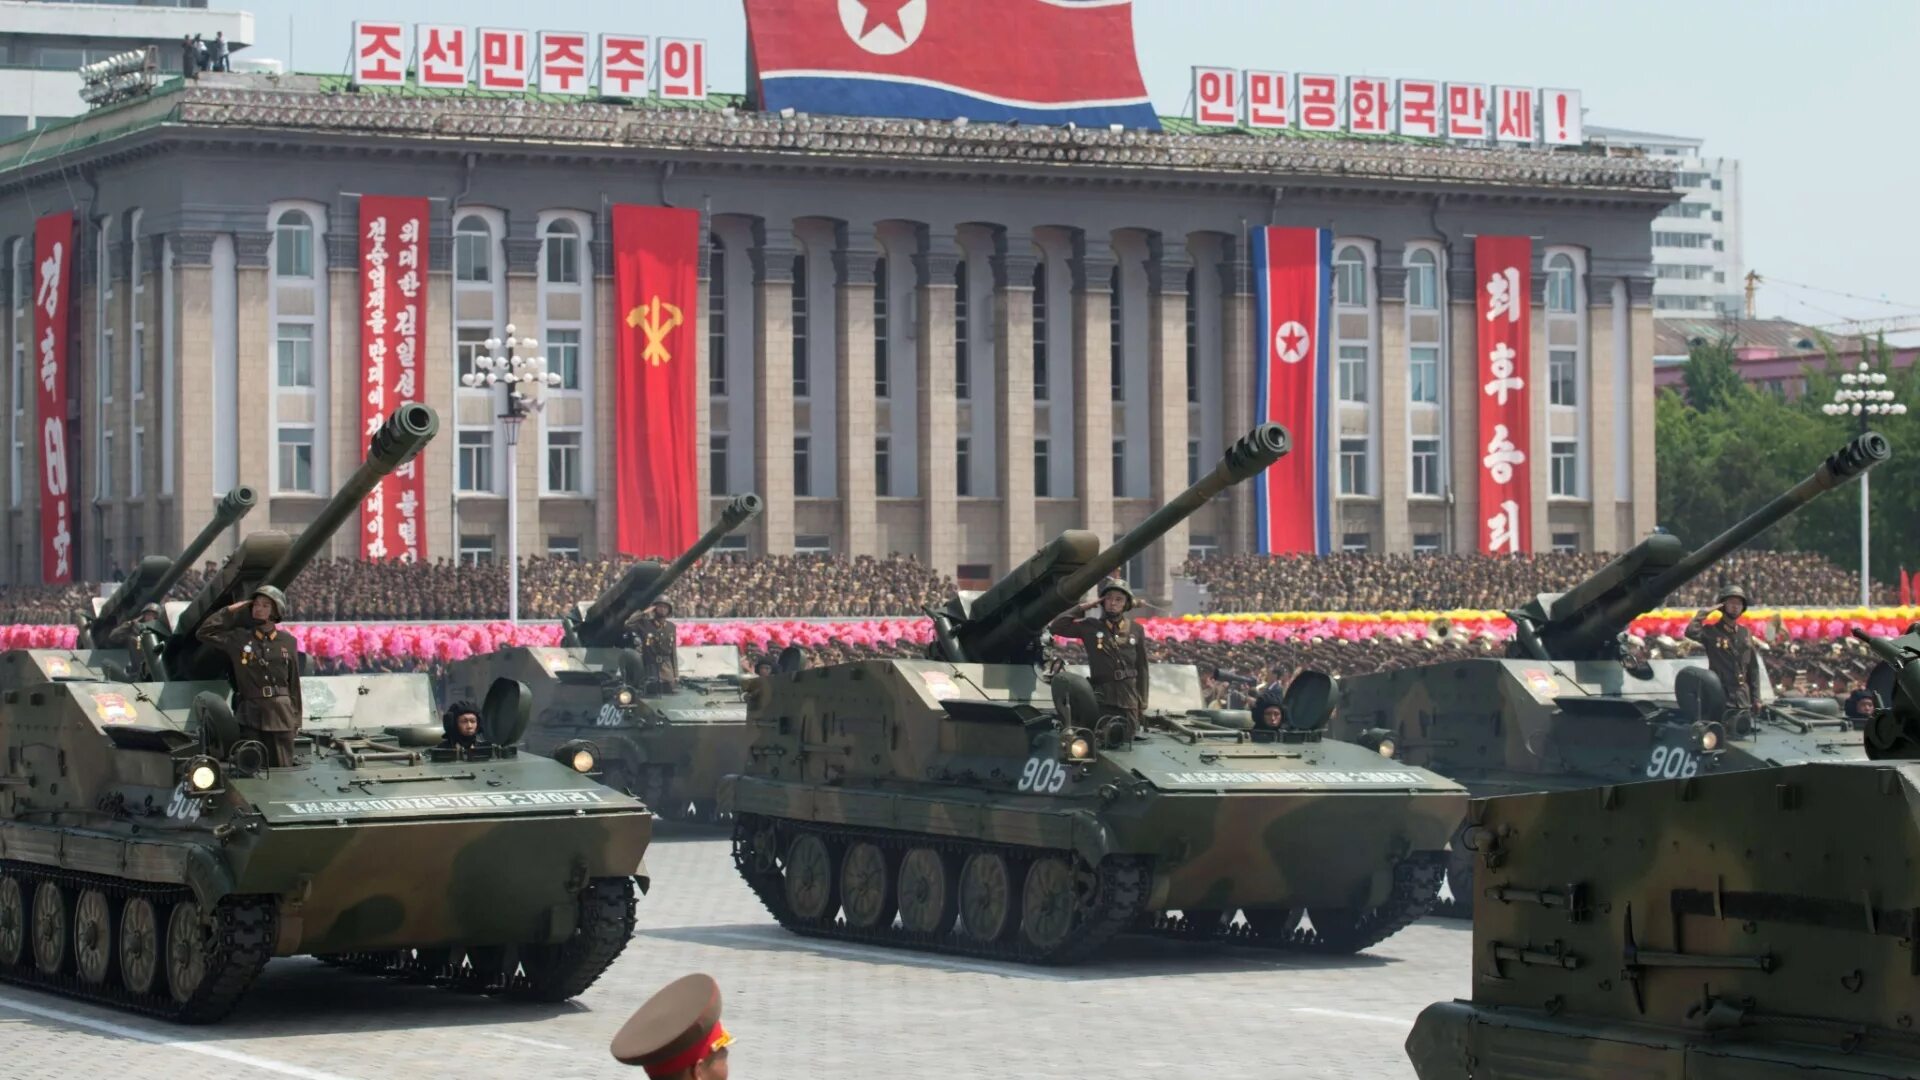 Танк КНДР m2020. Чхонмахо-216. Северокорейский танк Pokpung-ho. Бронетехника Северной Кореи.